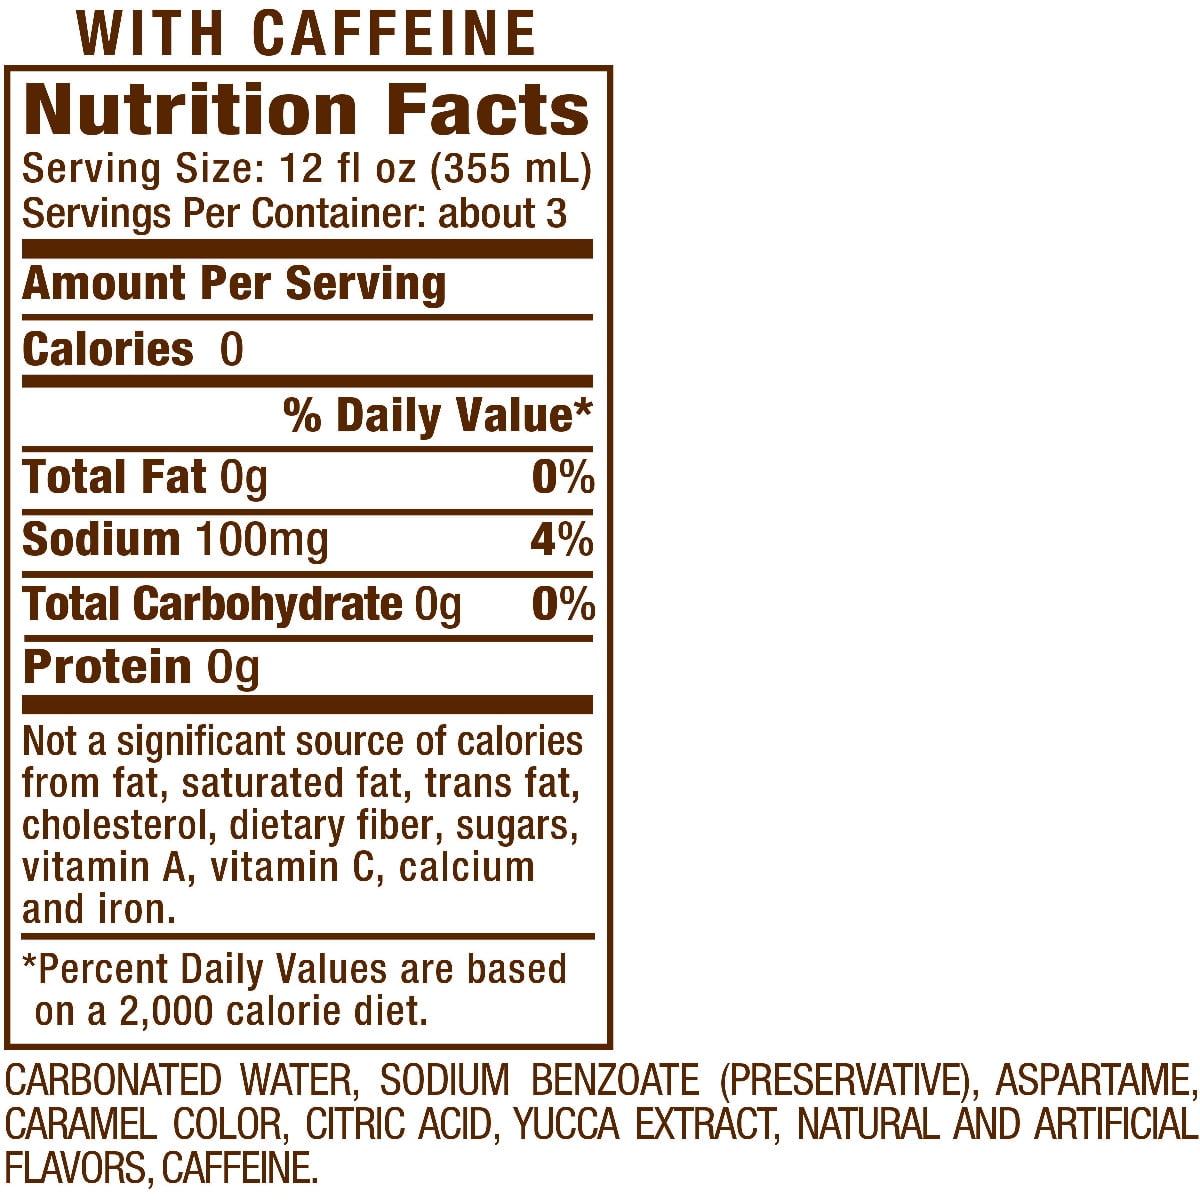 Diet Aw Cream Soda 2 L Walmart intended for nutrition facts 20 oz coke regarding Inspire